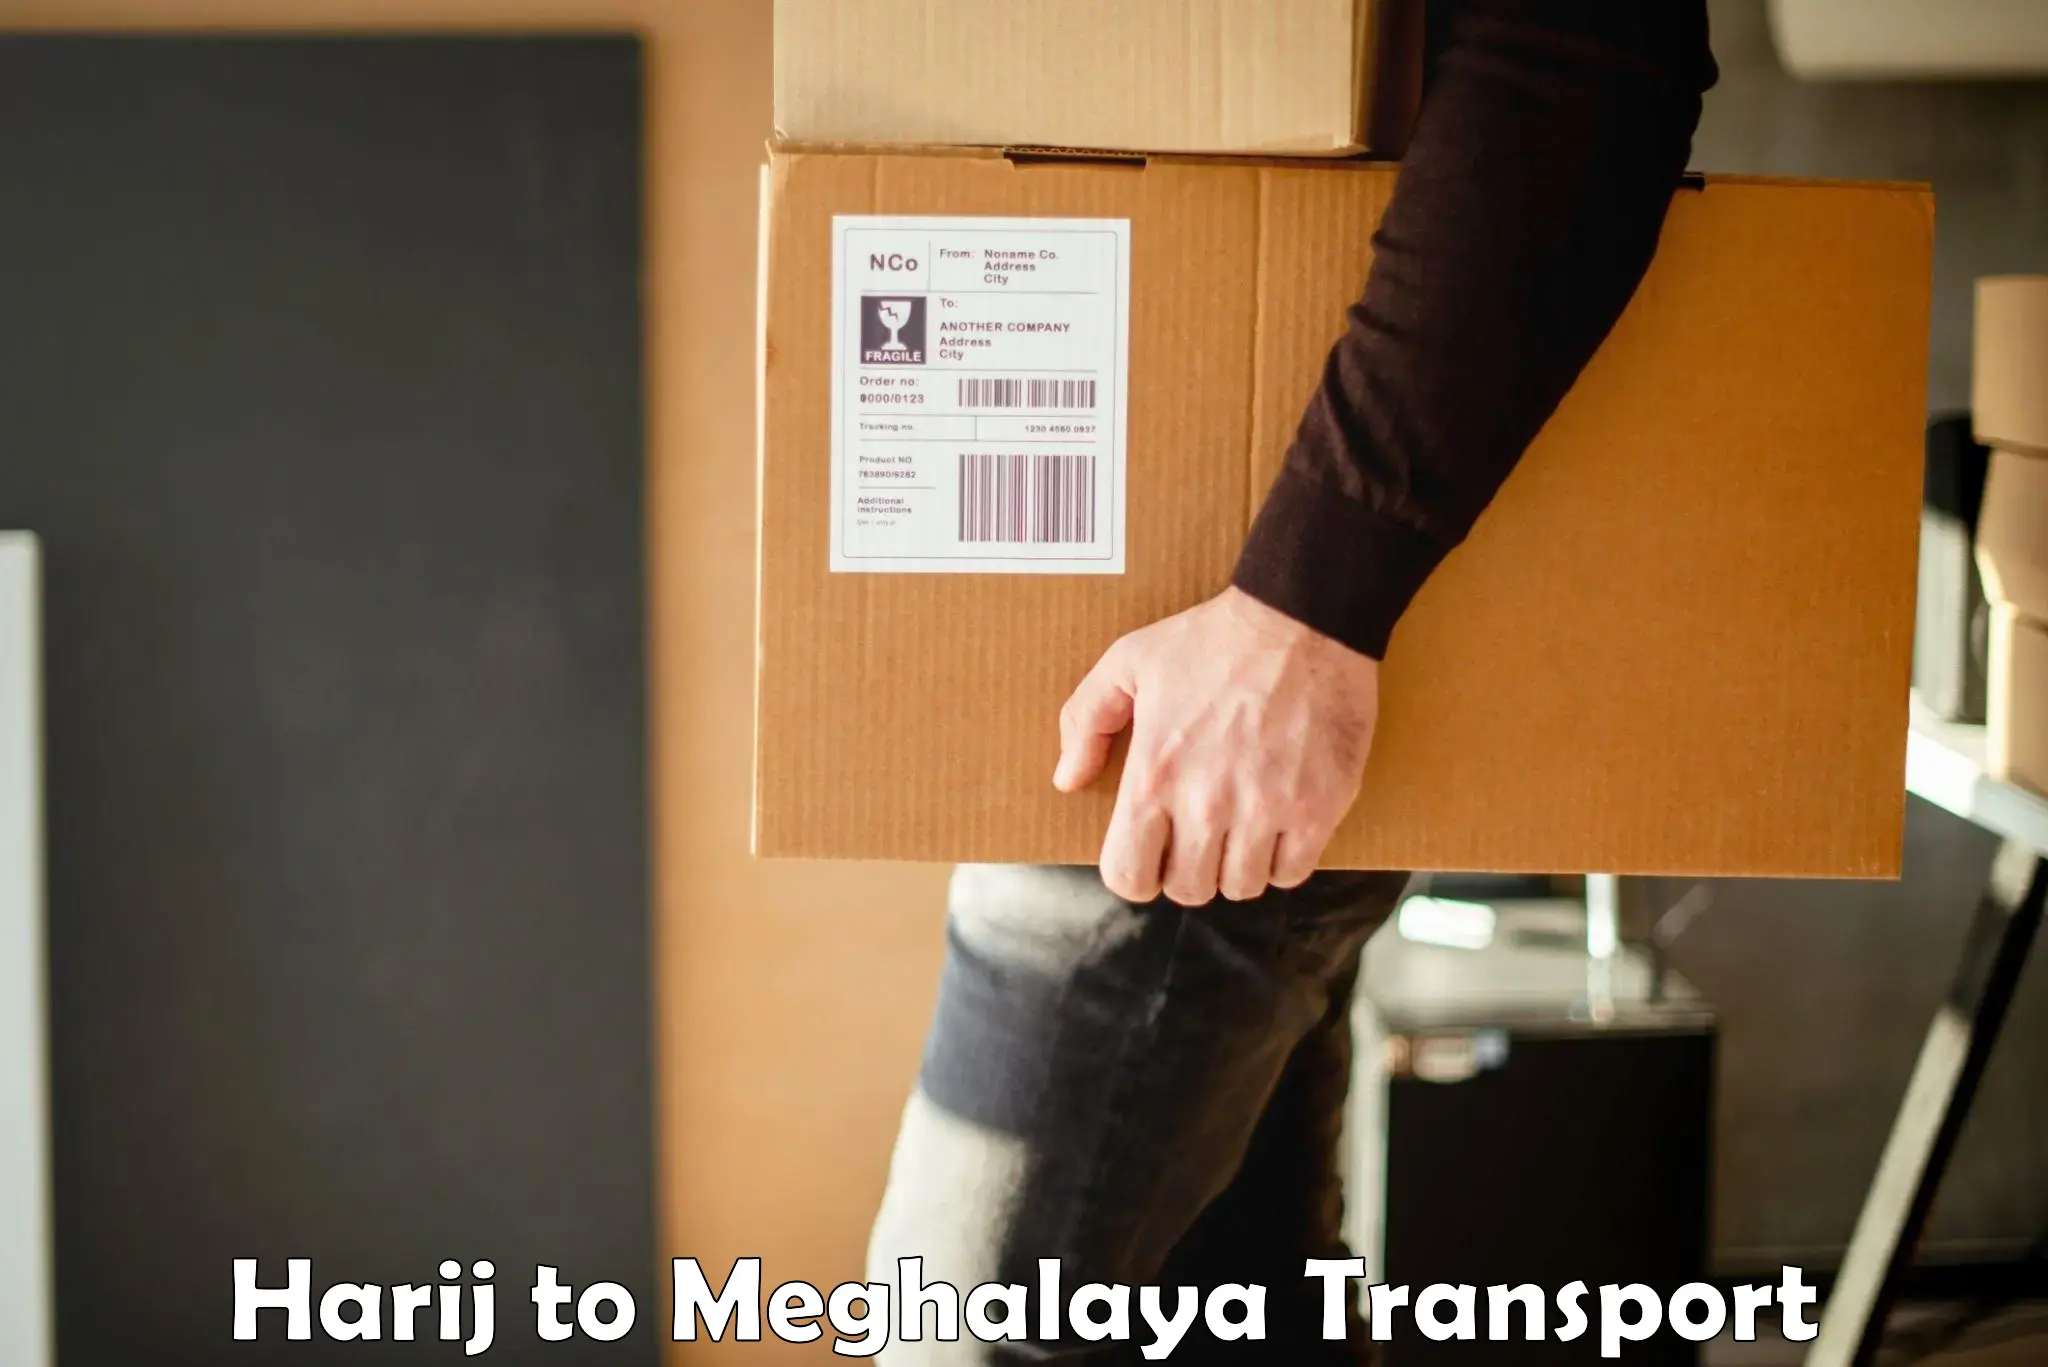 Transport in sharing Harij to Meghalaya